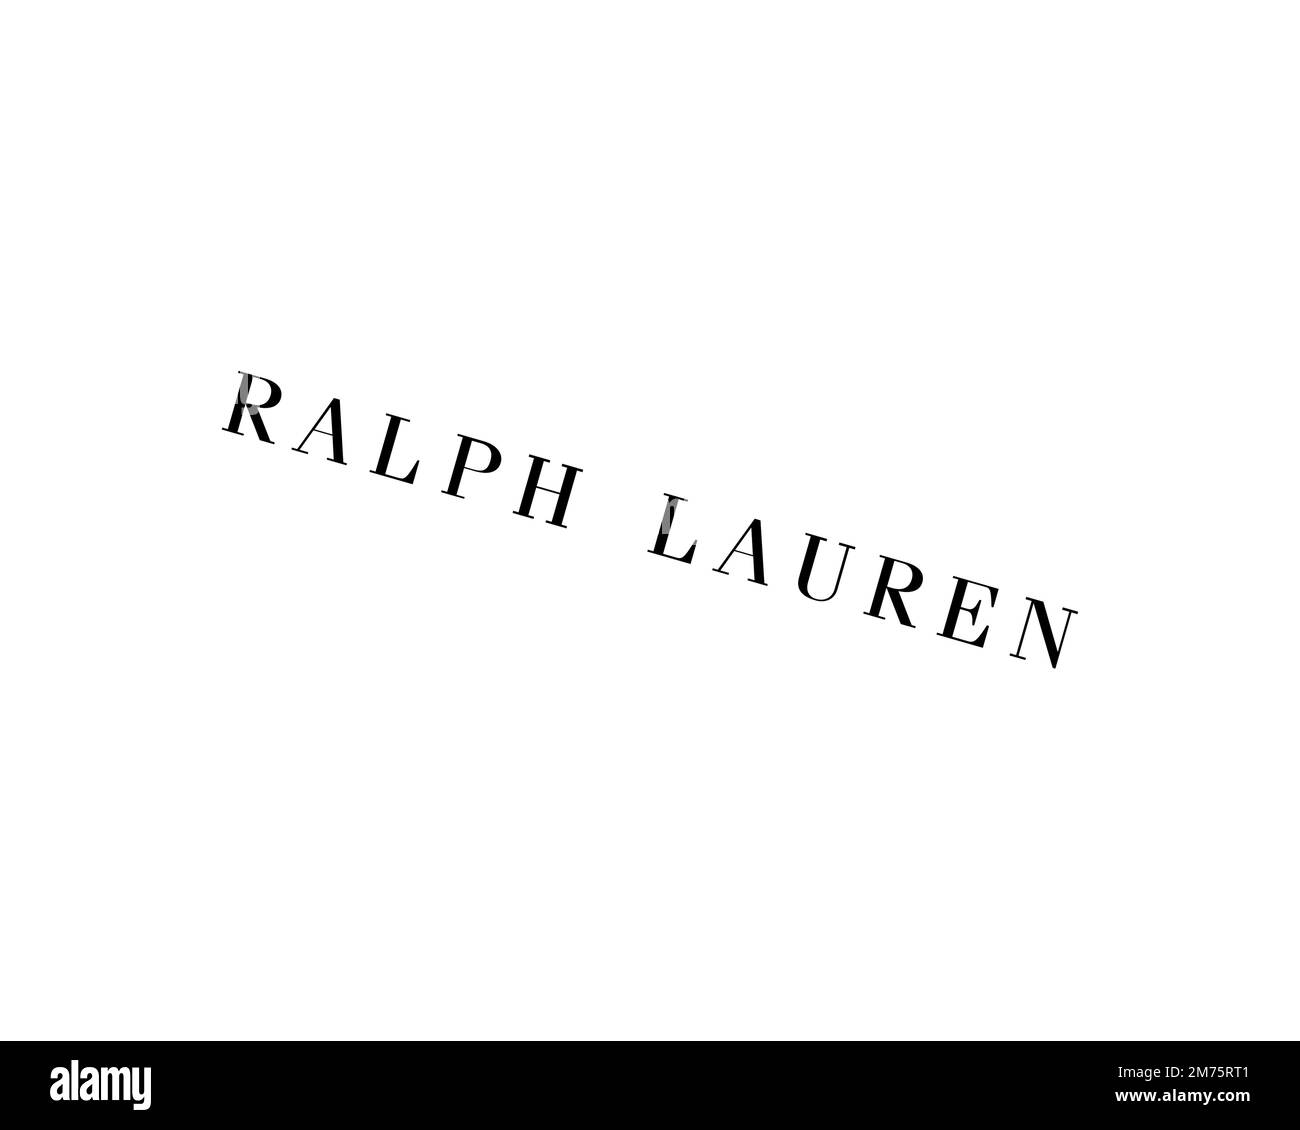 Ralph lauren company logo Black and White Stock Photos & Images - Alamy